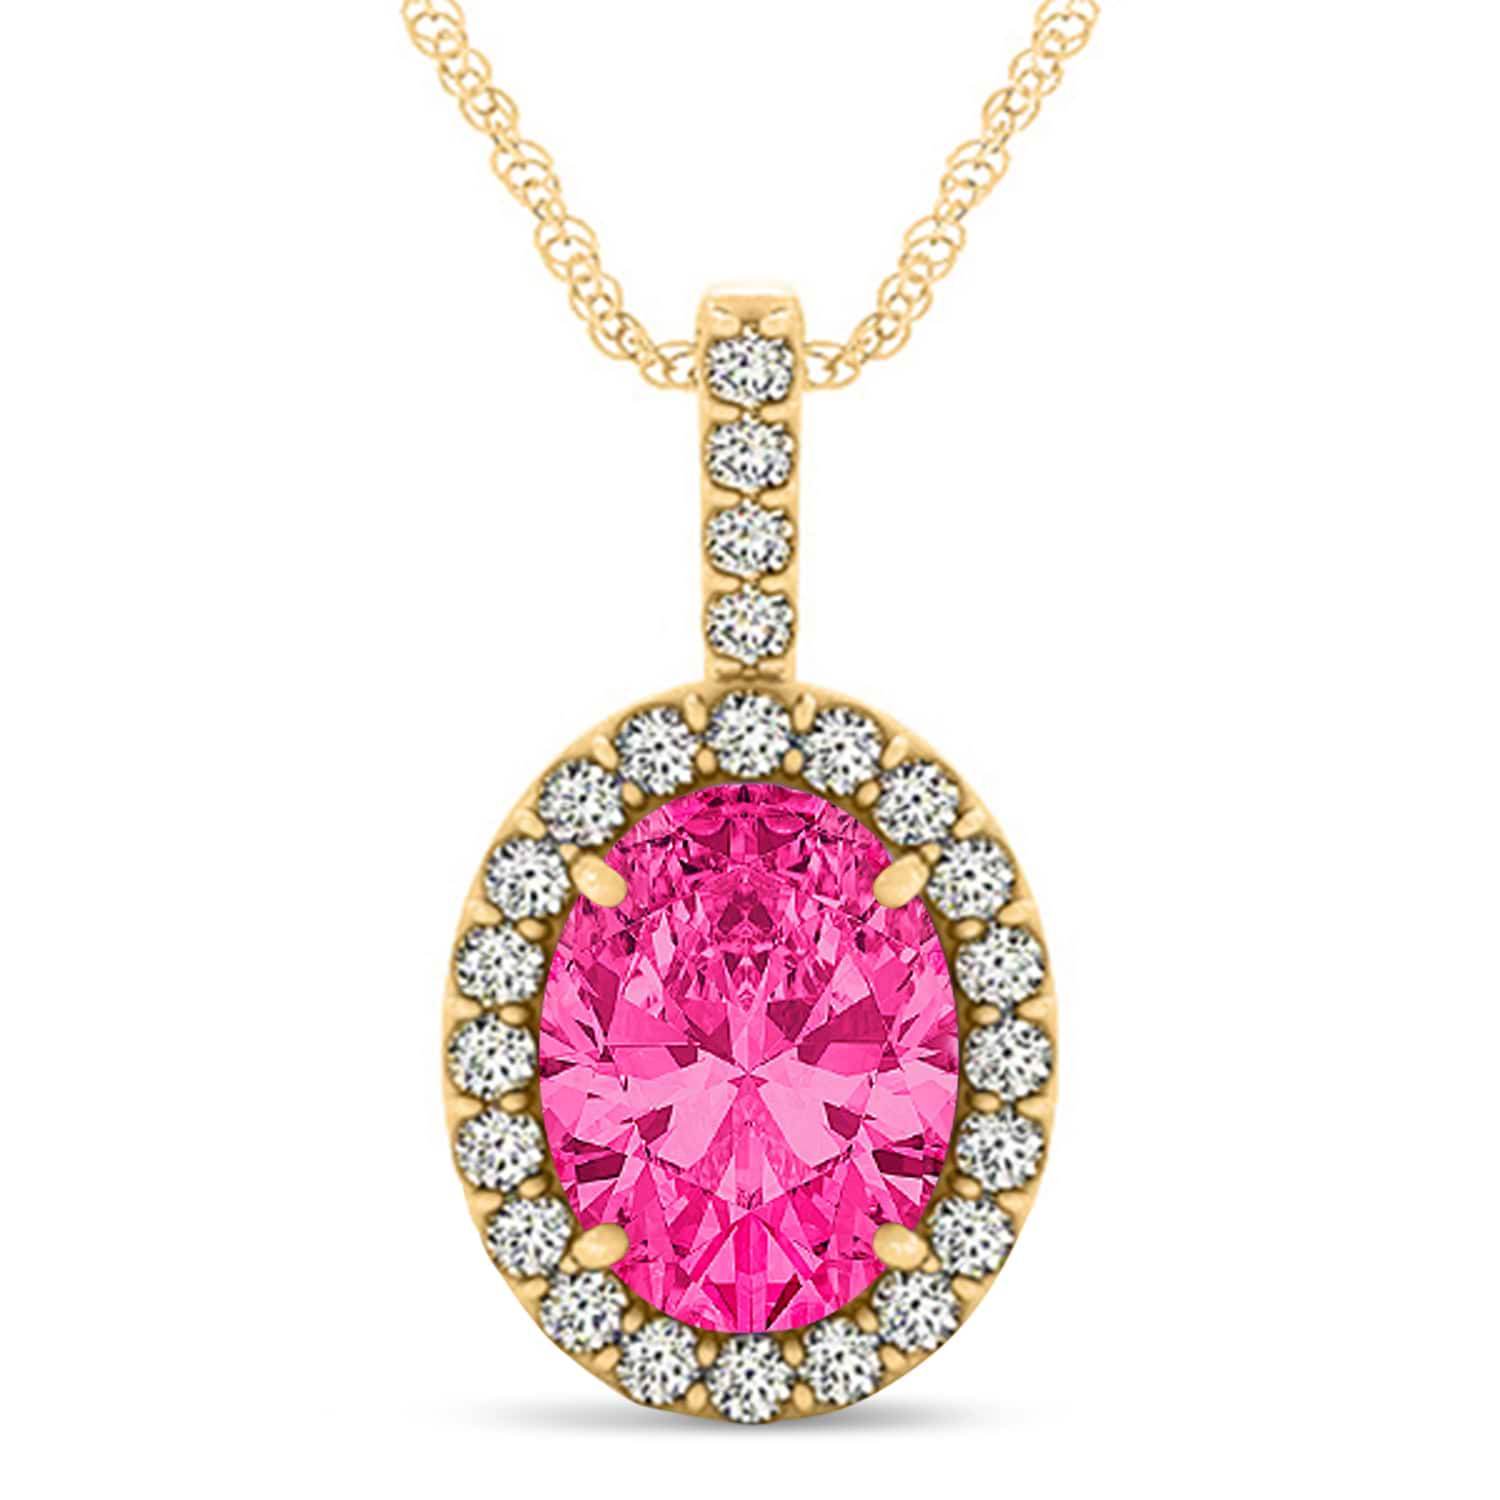 Pink Tourmaline & Diamond Halo Oval Pendant Necklace 14k Yellow Gold (3.02ct)